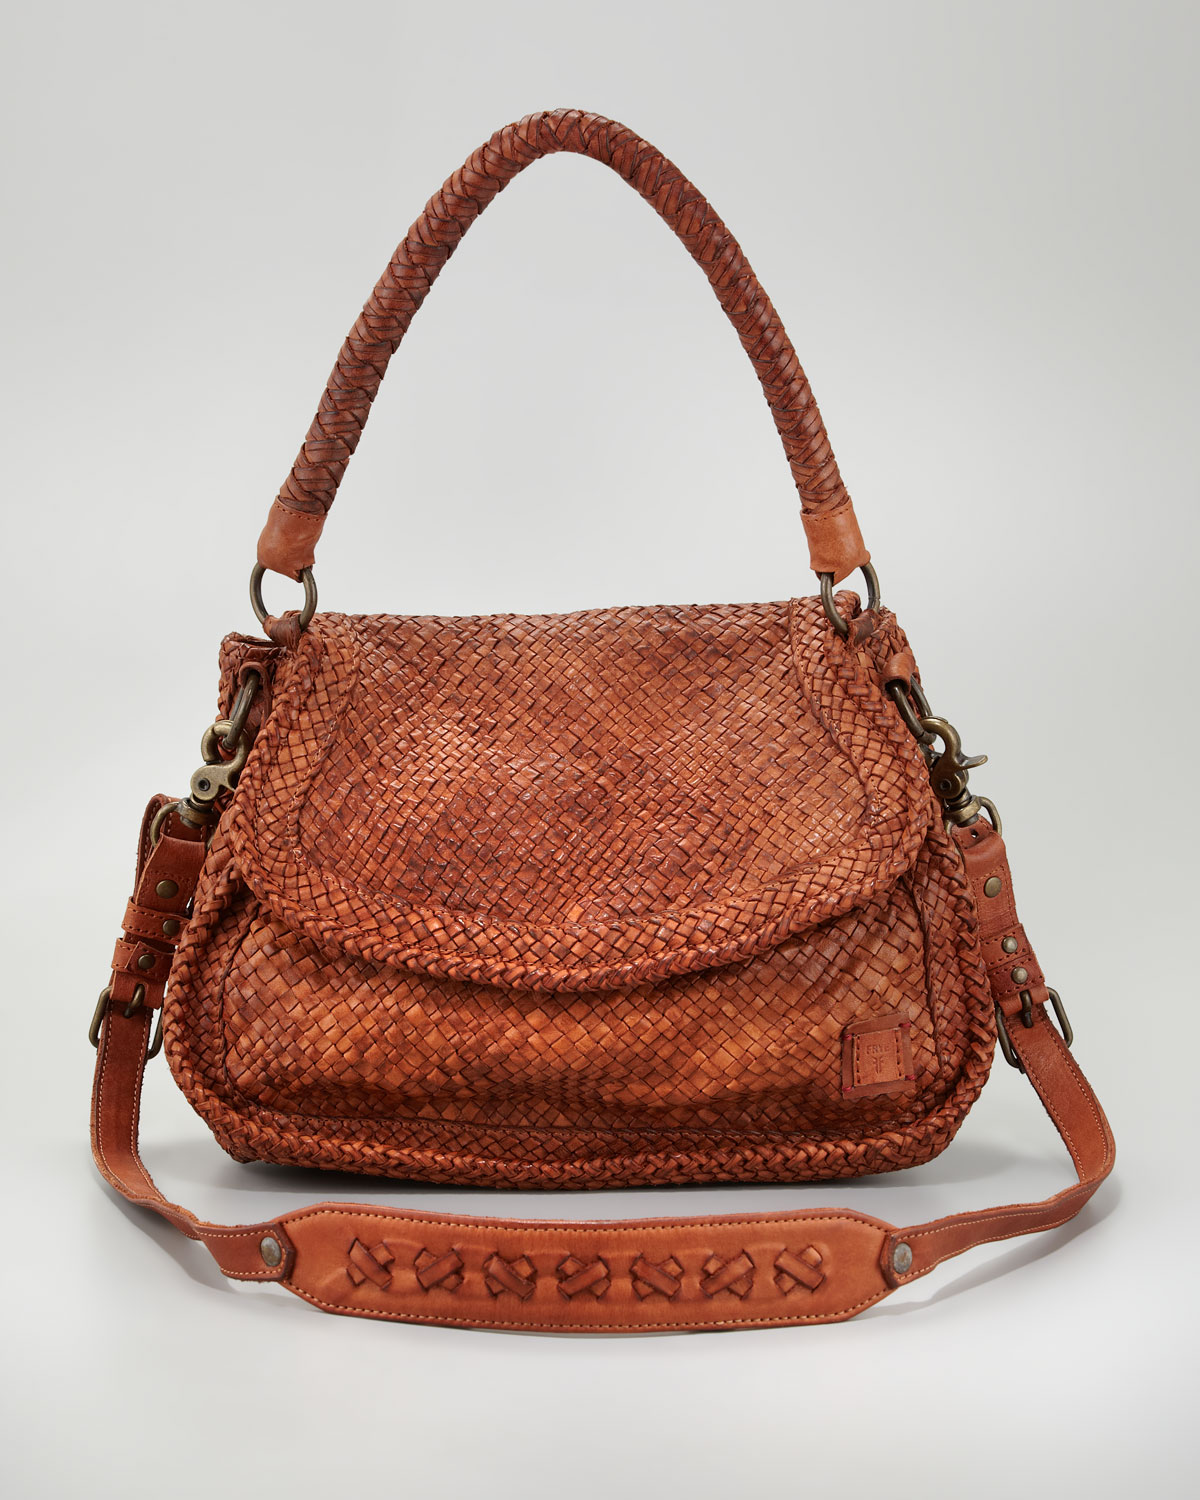 Frye Norah Woven Shoulder Bag in Cognac (Brown) - Lyst